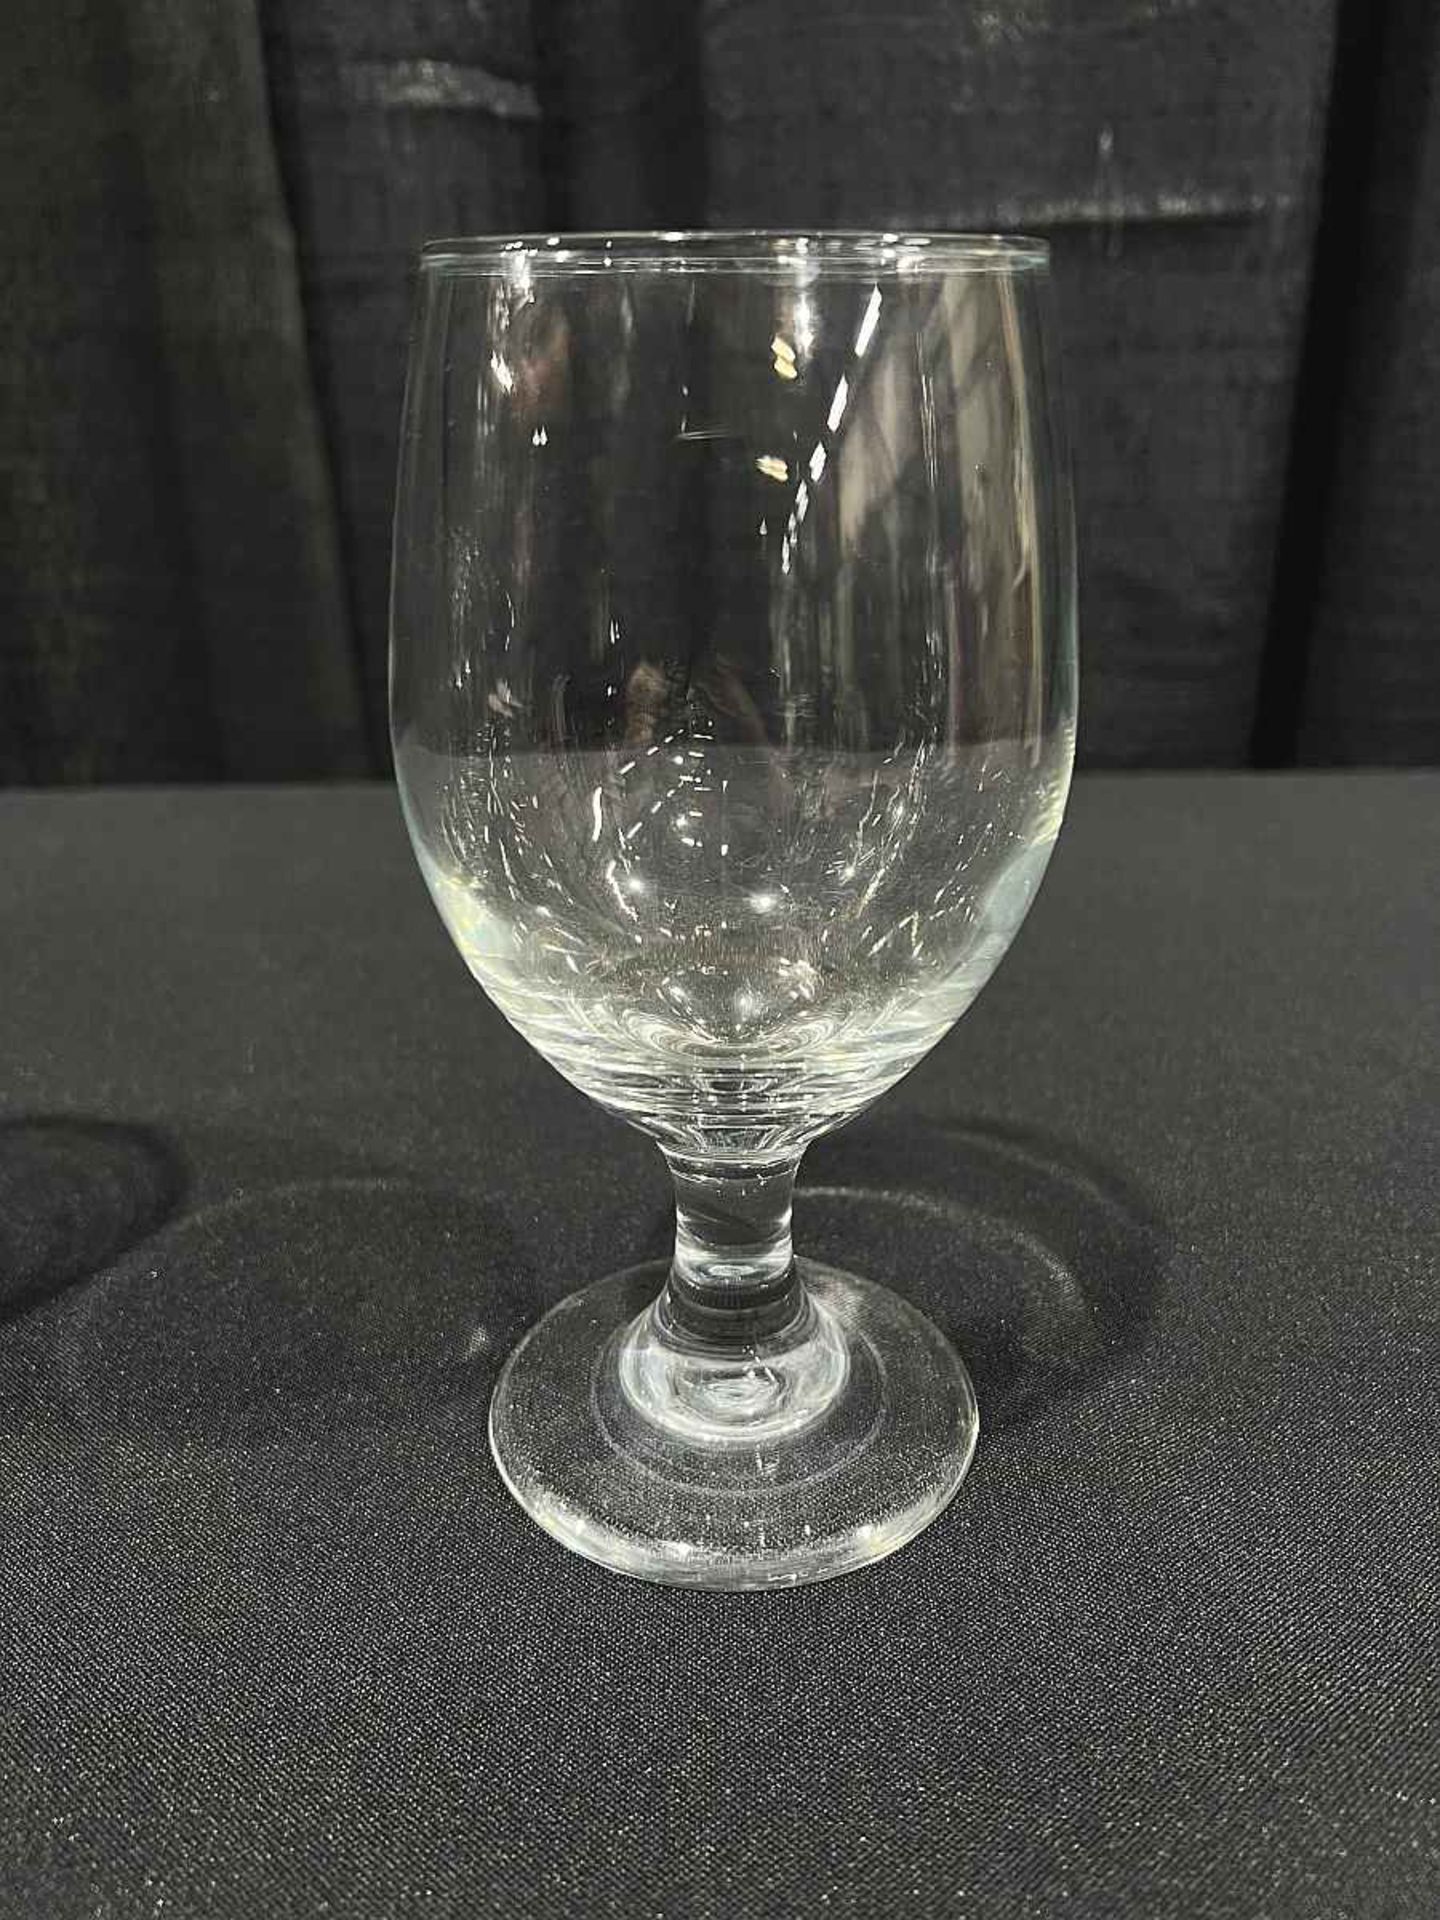 Perception Water Glass, 14 oz